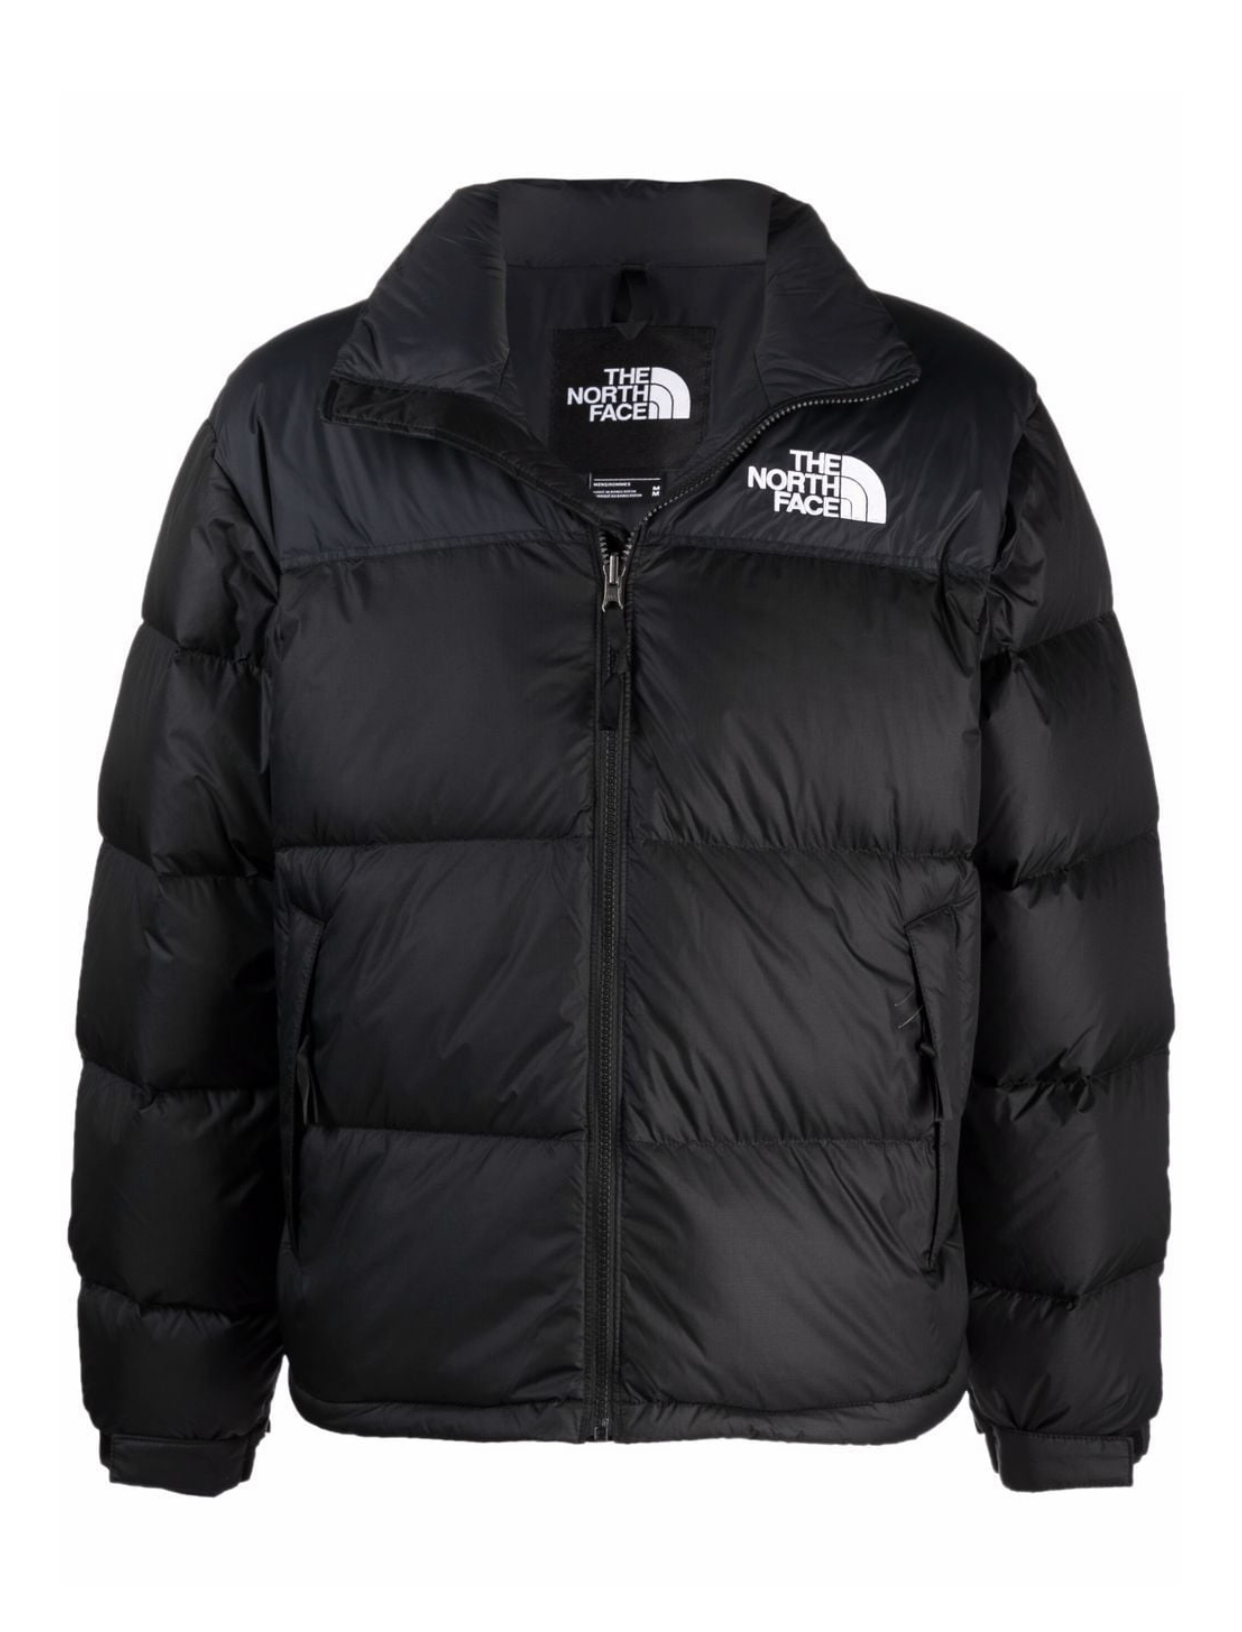 The North Face 1996 Retro Nuptse Jacket ‘BLACK’ – Klean Kicks Lab